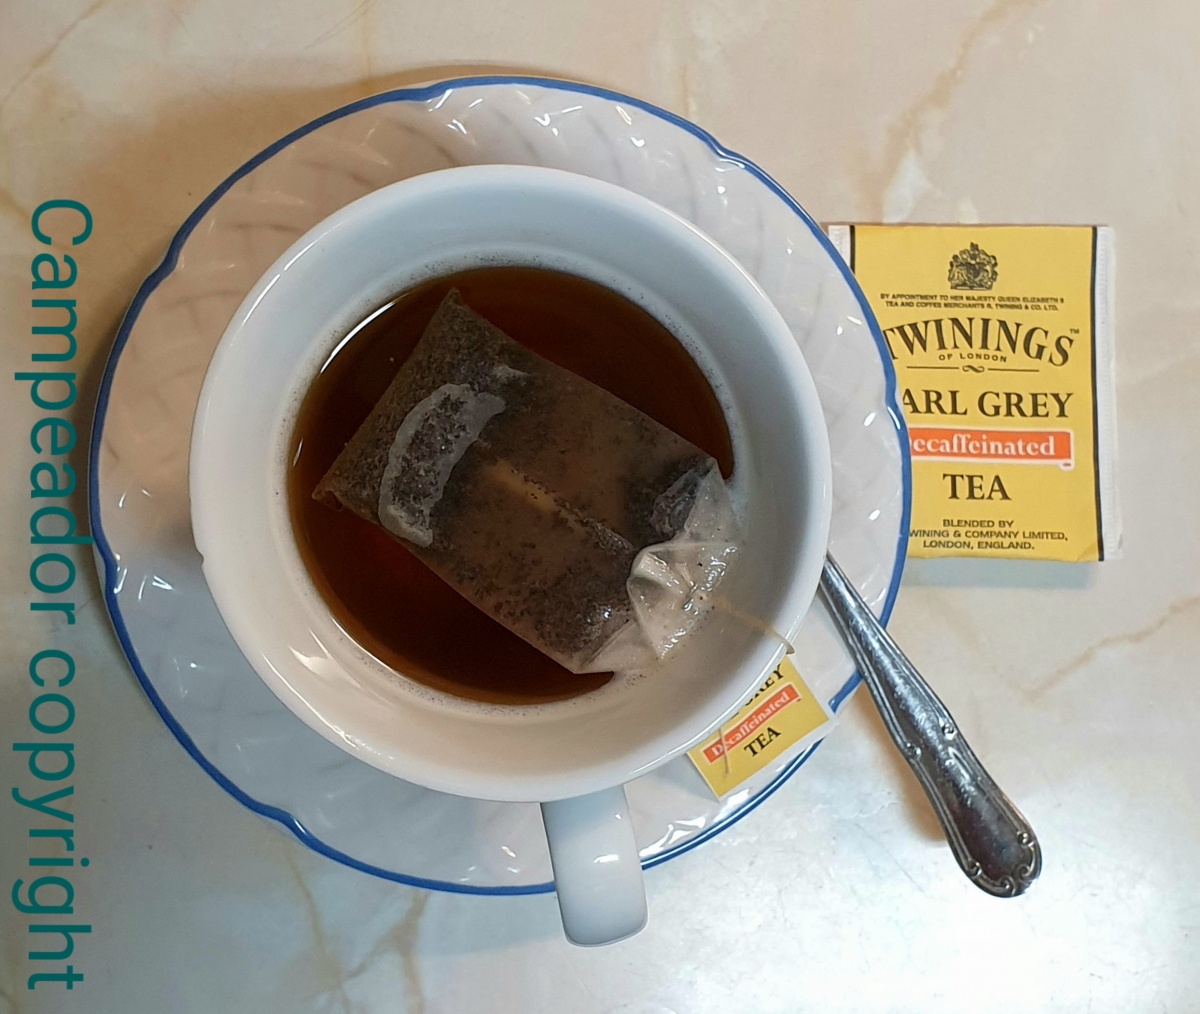  Twinings Earl Grey Tea Decaffeinated. T descafeinado Earl Grey Twinings. Photo by Campeador.